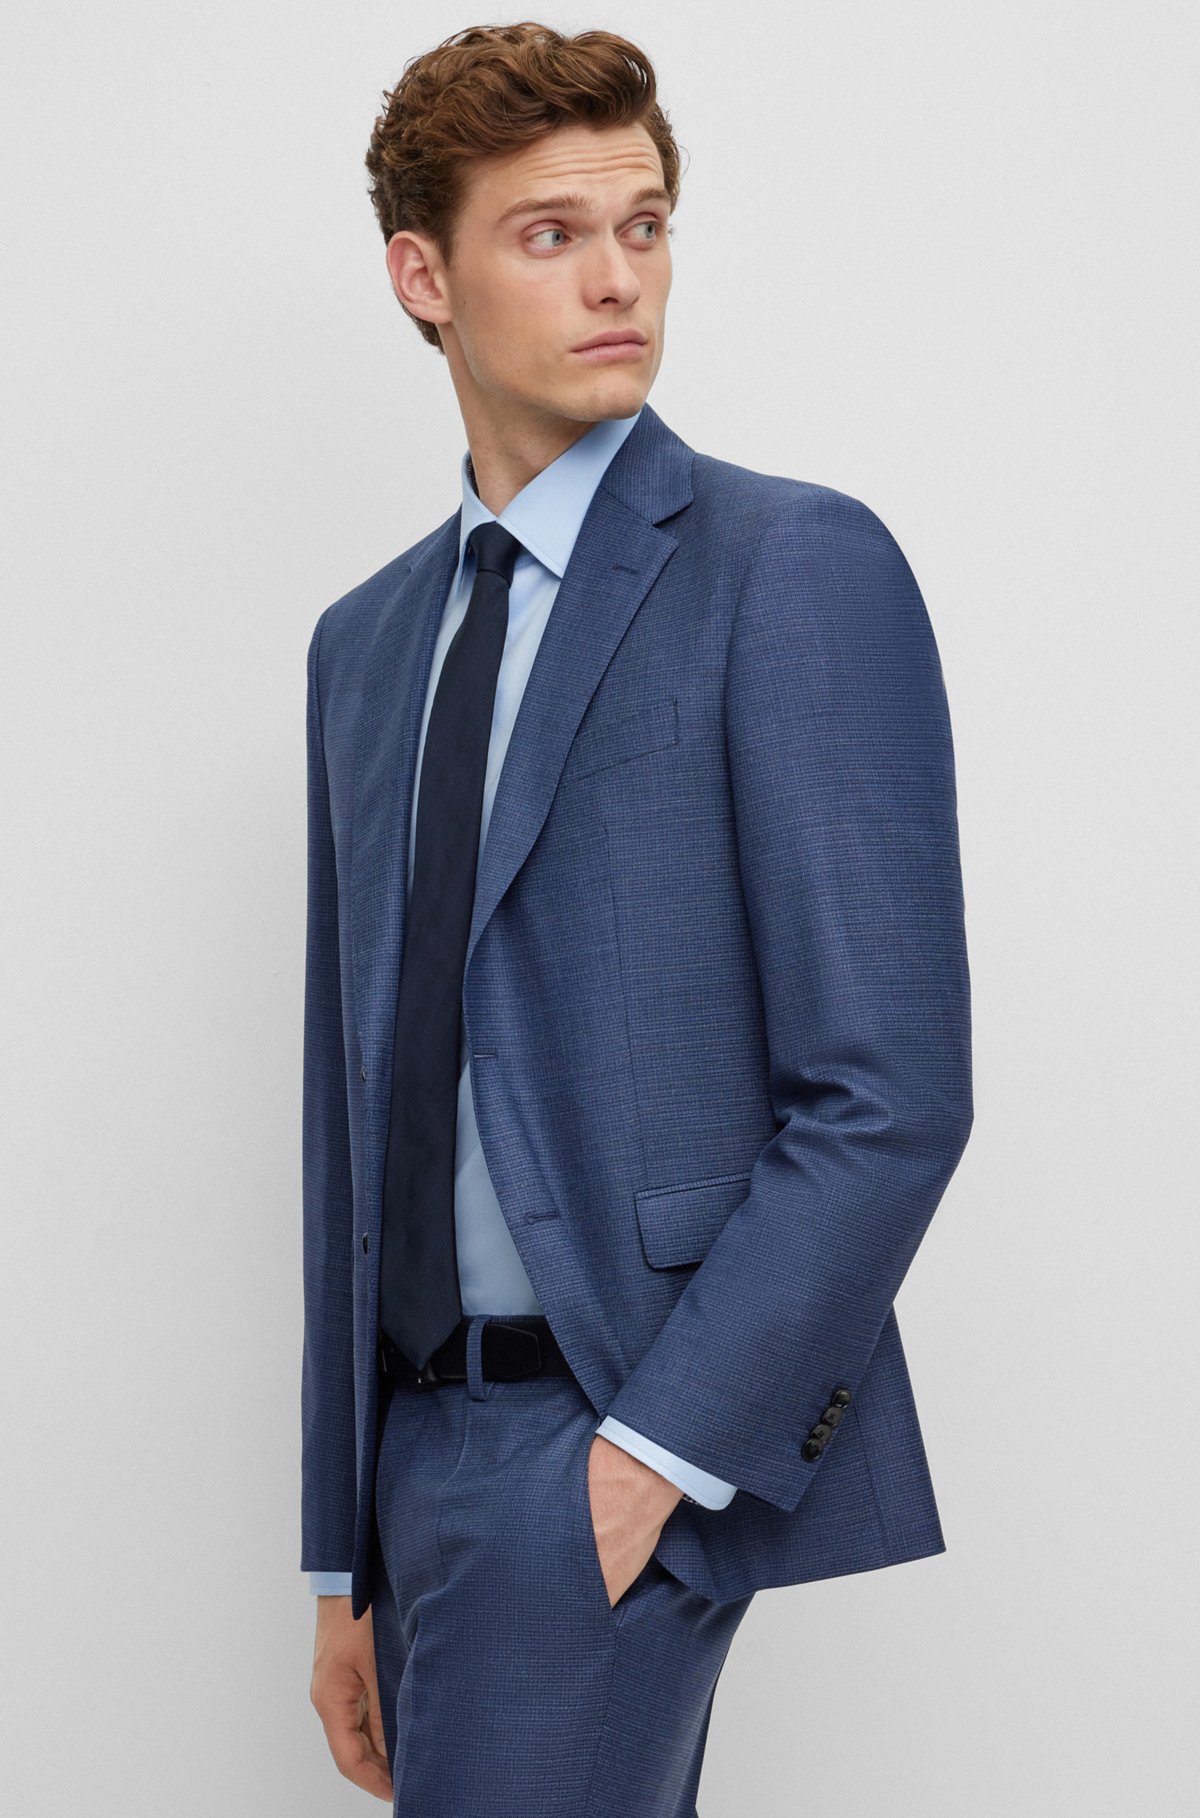 Regular-fit suit in a micro-patterned wool blend, Dark Blue